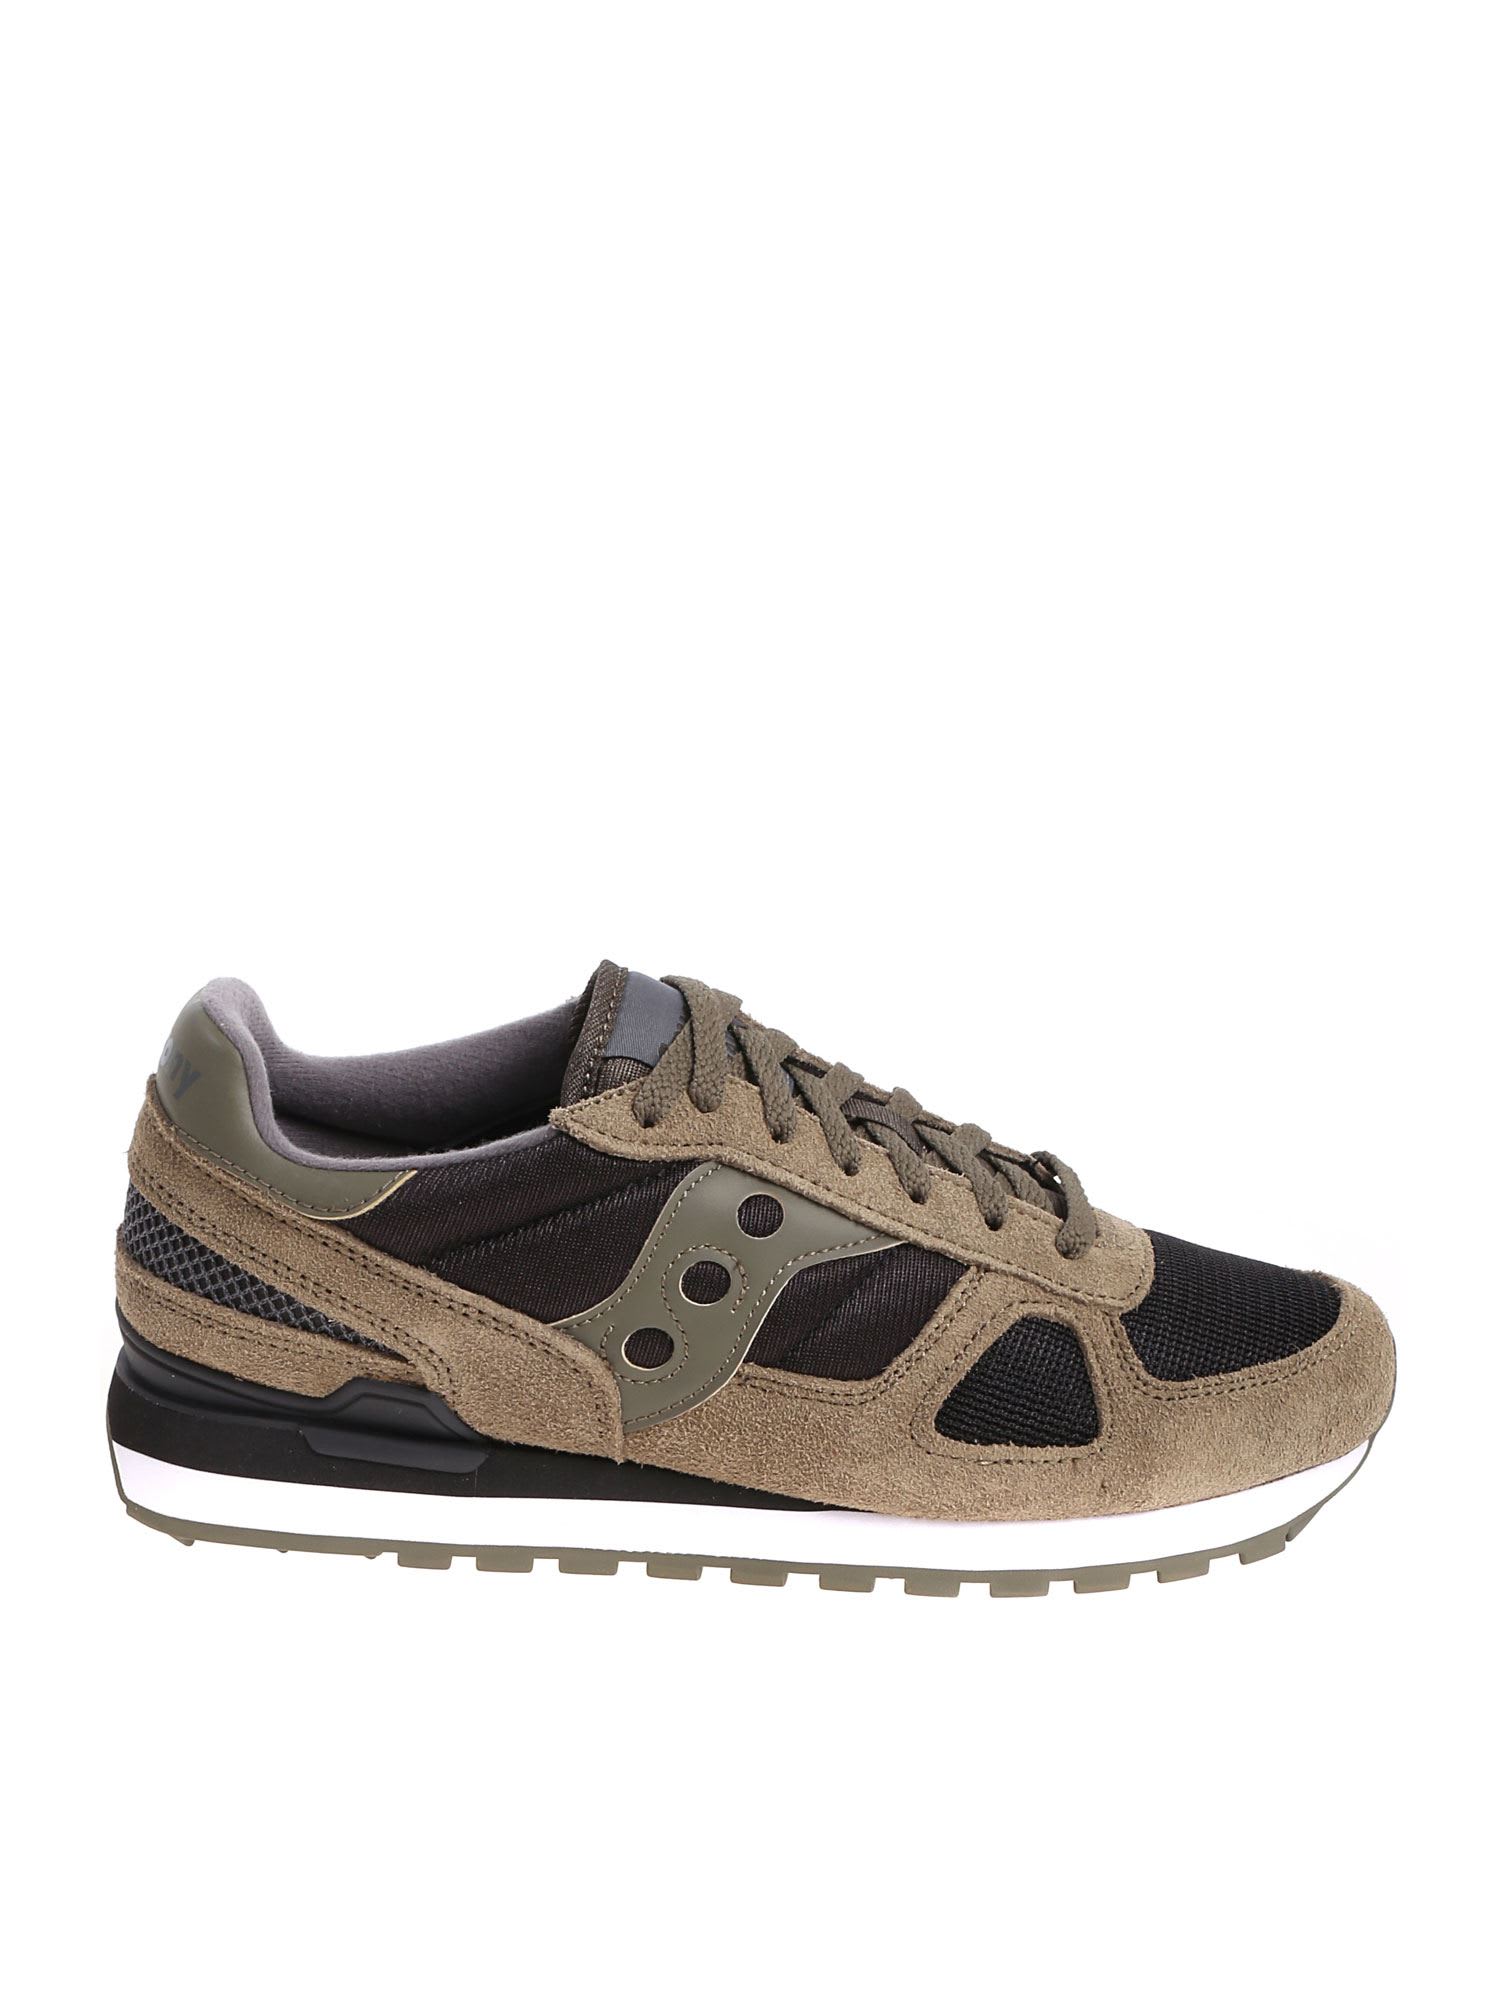 Saucony Shadow Original Sneakers - Olive/Black - 11067472 | italist